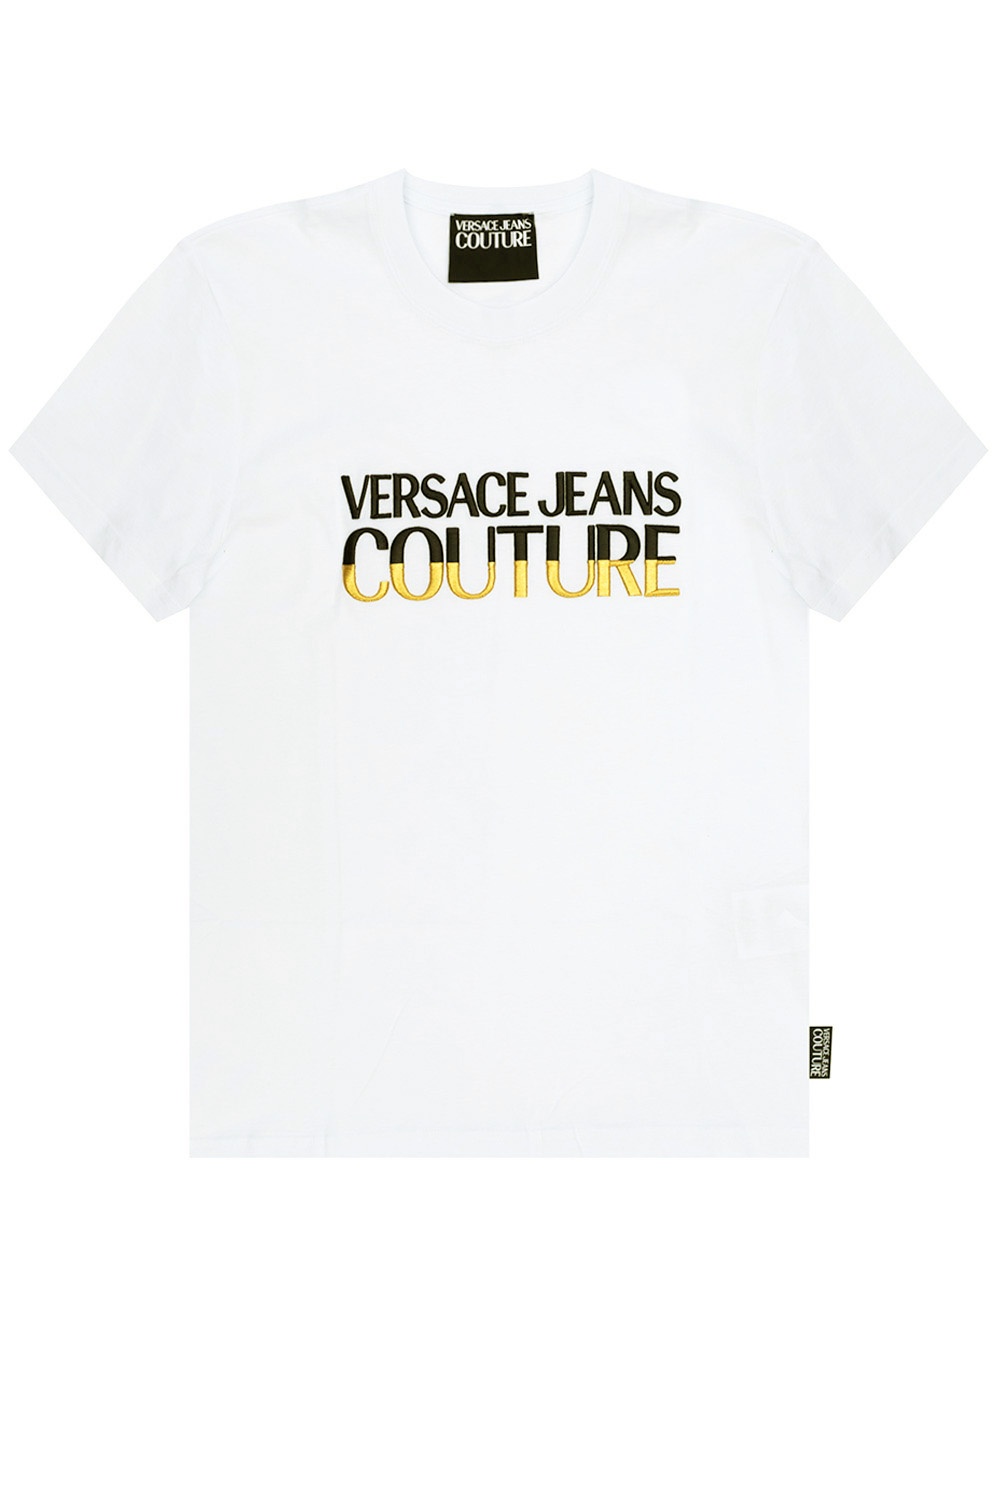 versace jeans white shirt